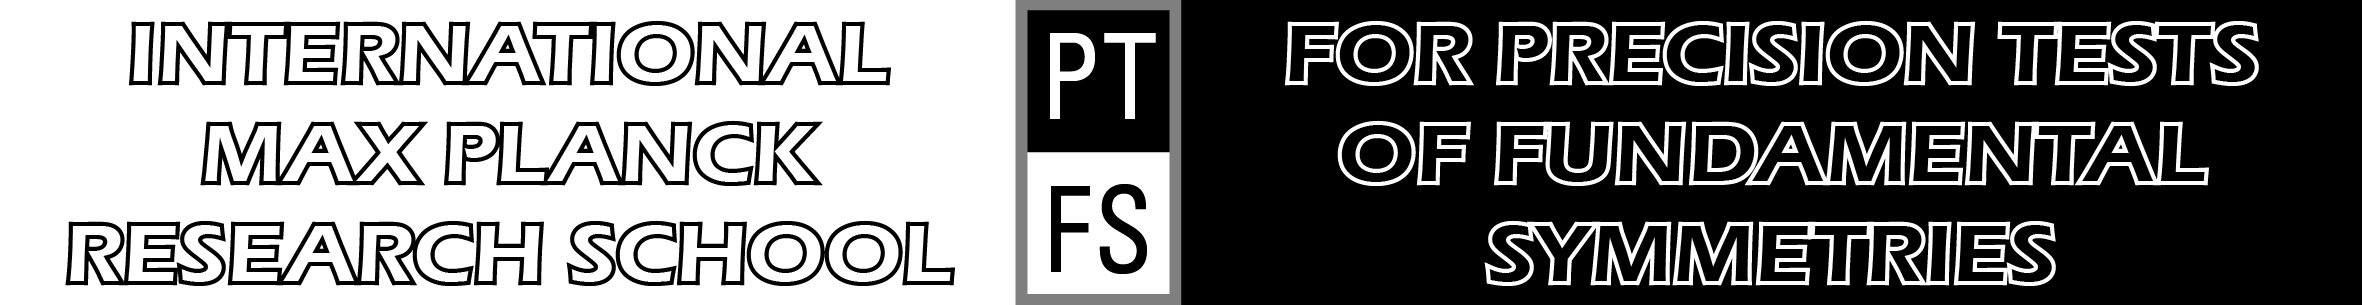 IMPRS PTFS logo